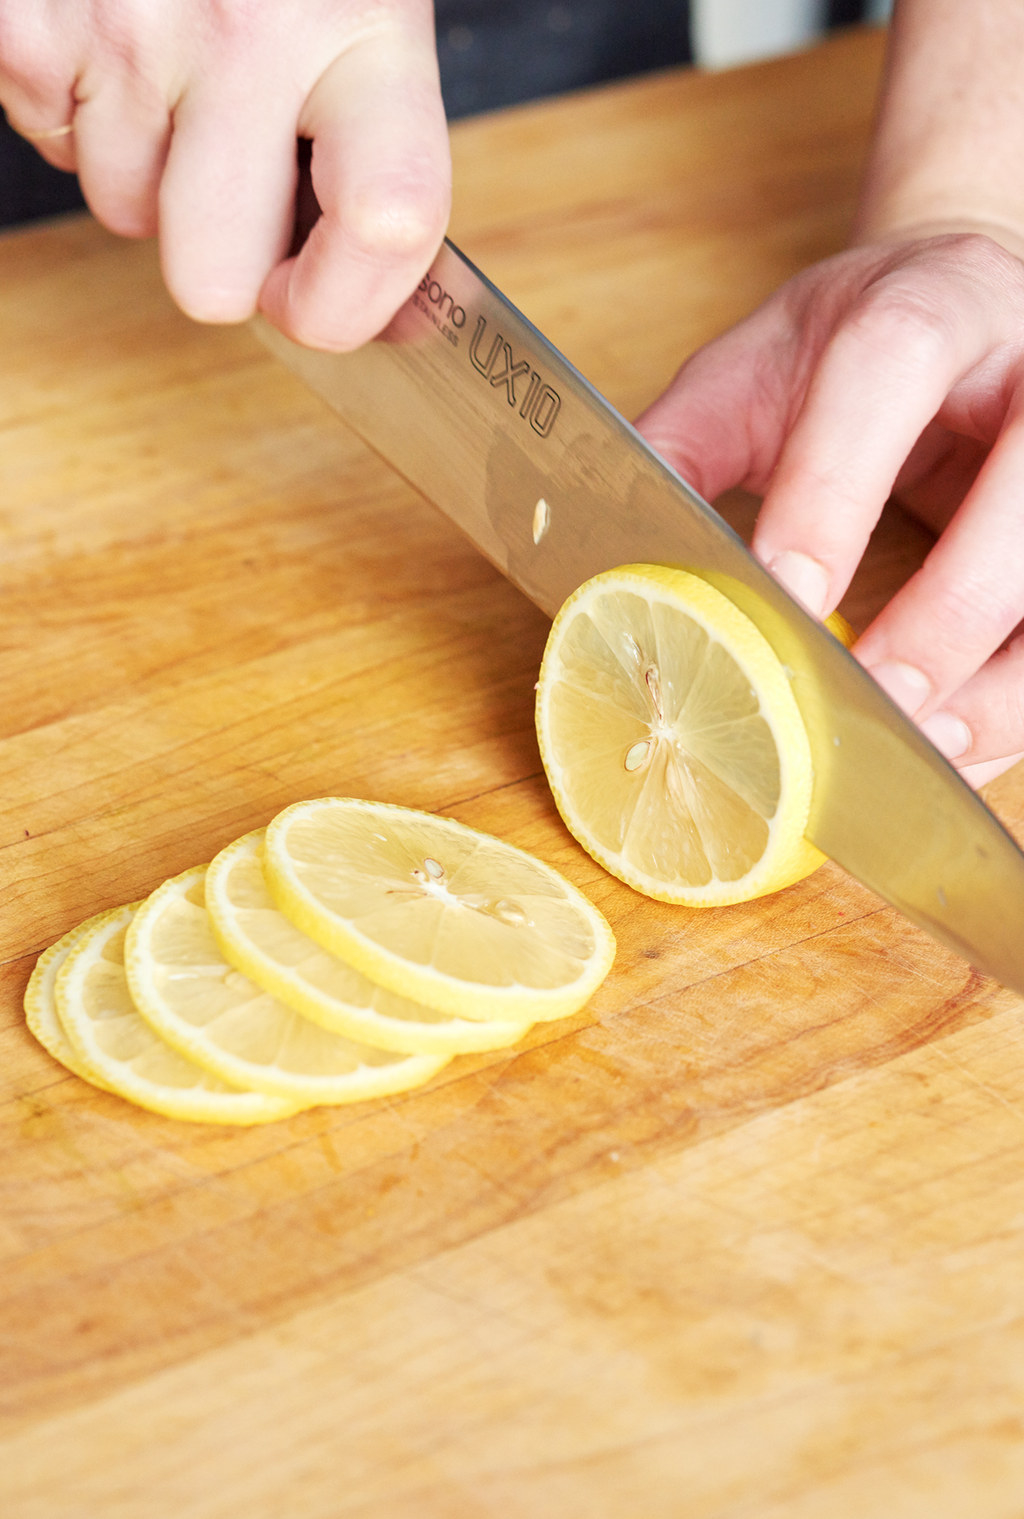 Slicing a lemon into rounds.